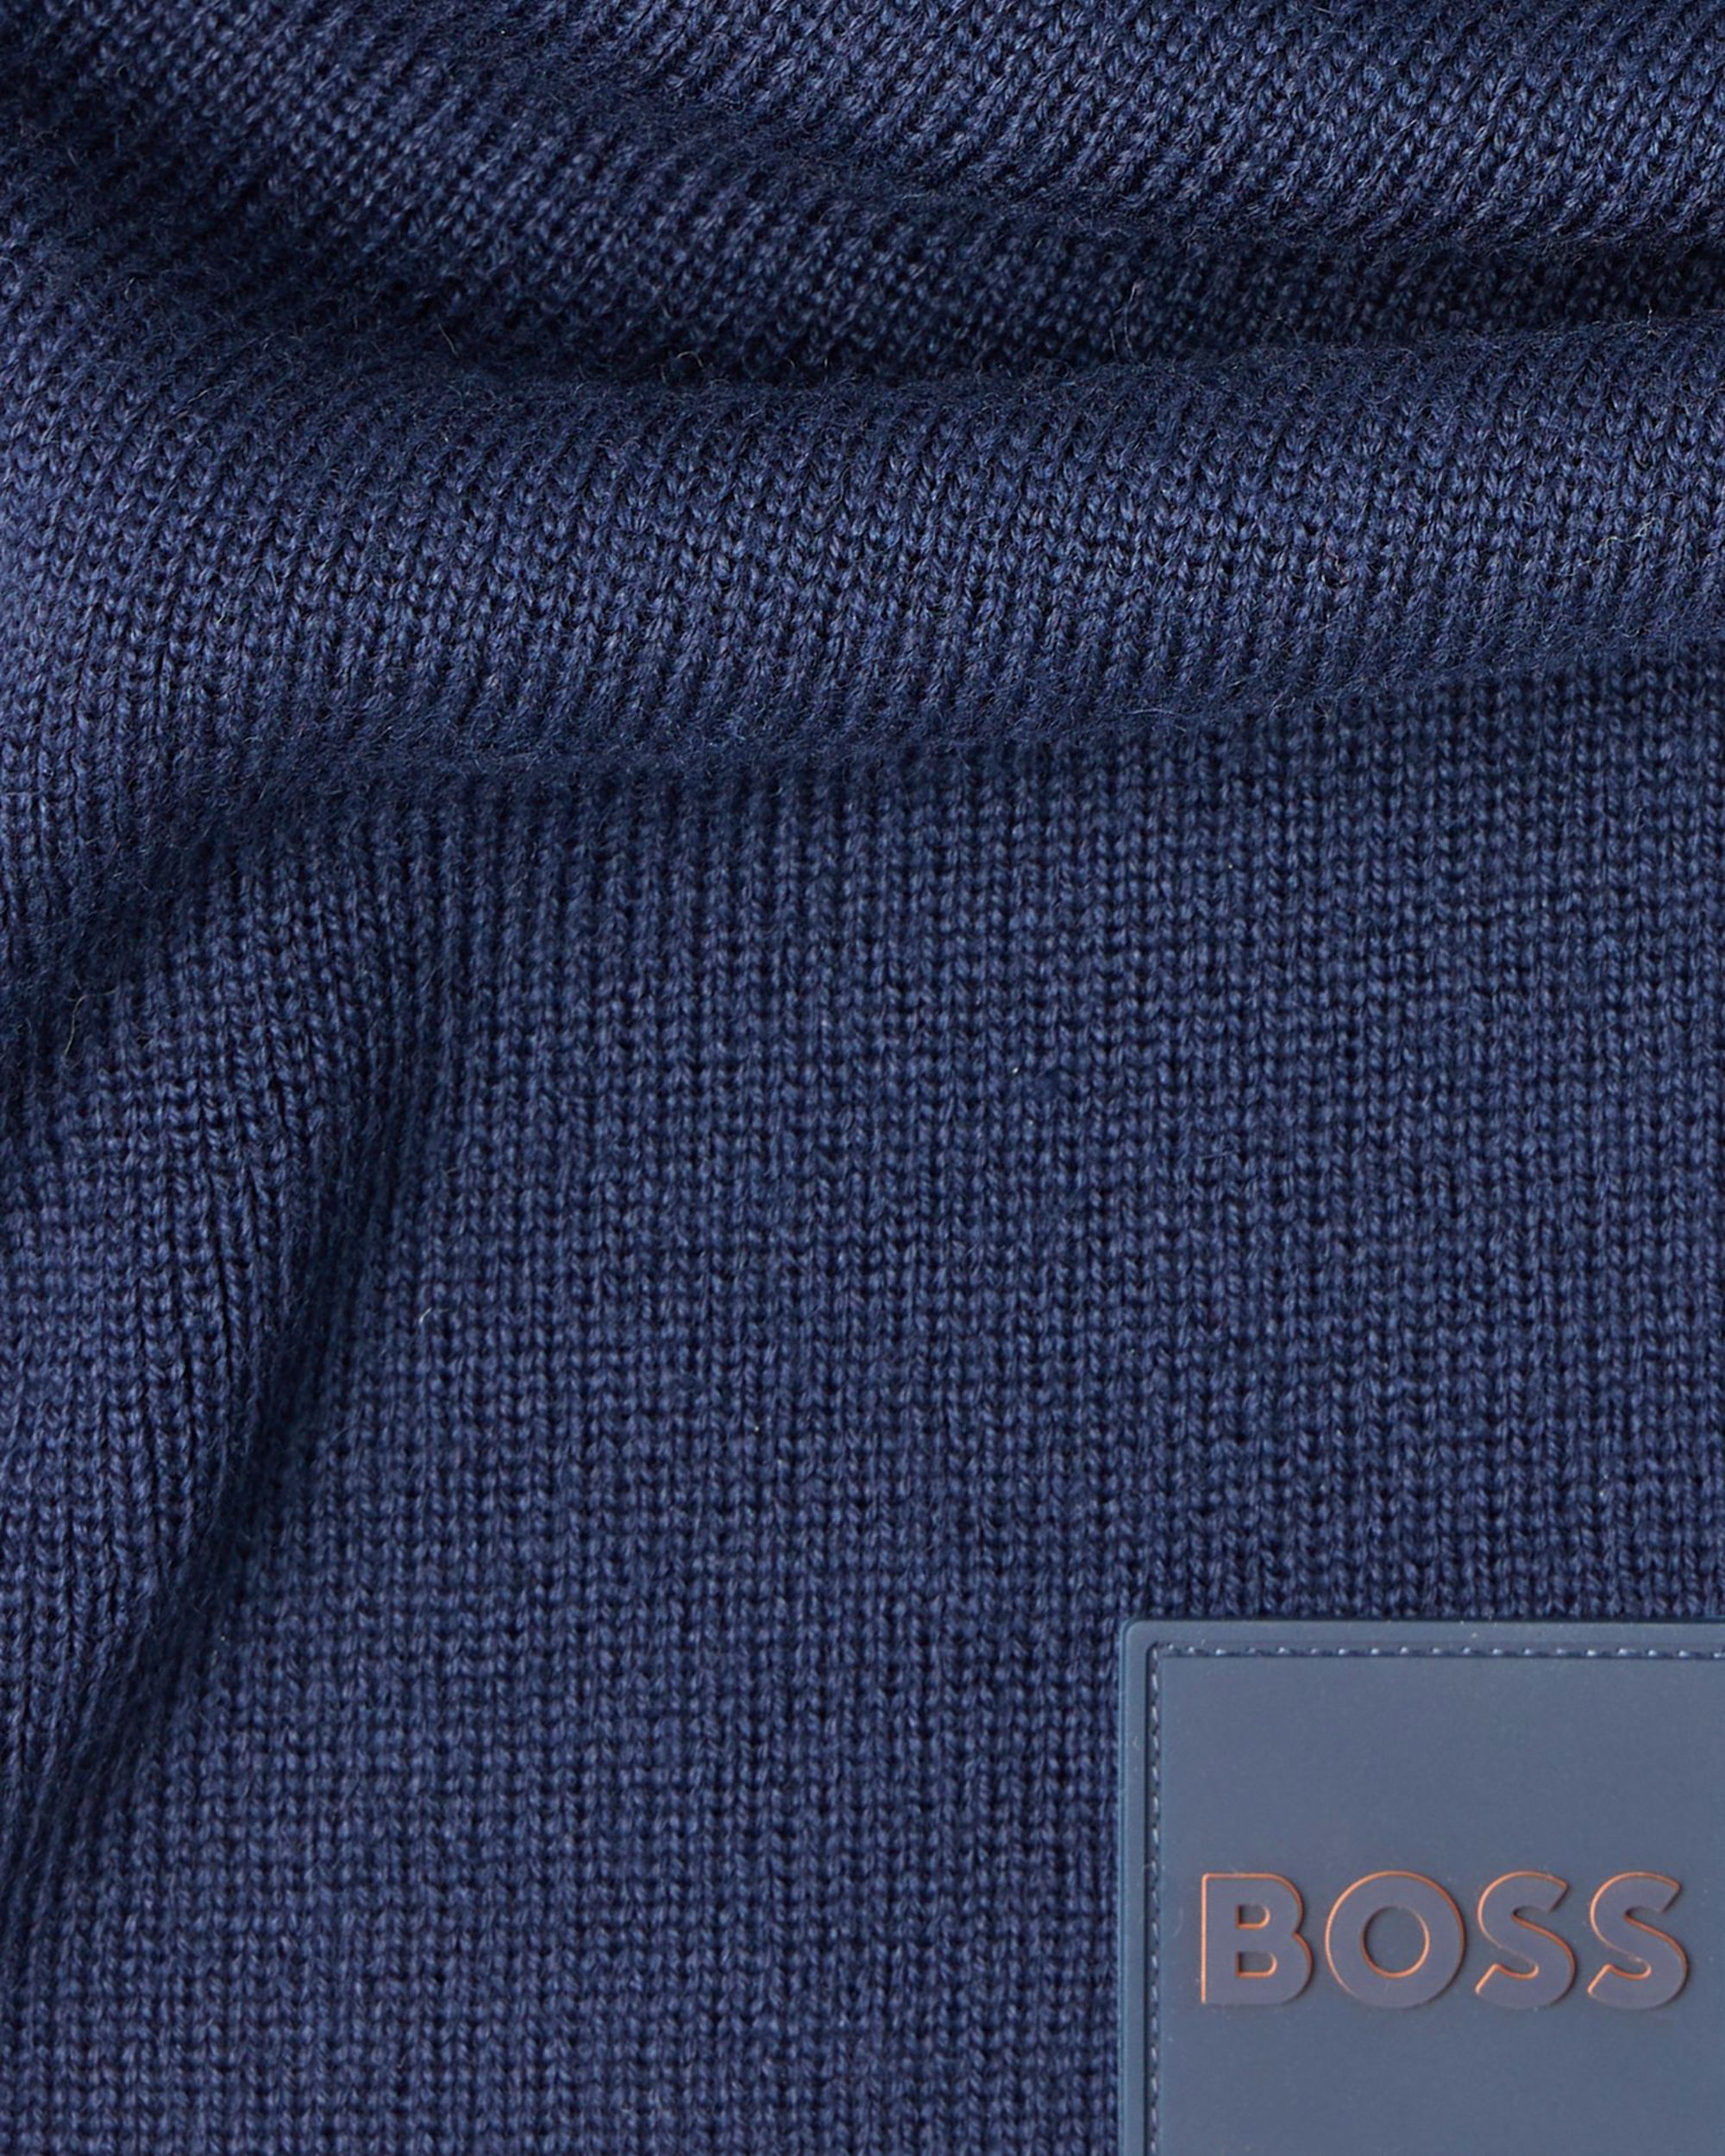 Hugo Boss Casual Foxon Sjaal Donker blauw 082413-002-0